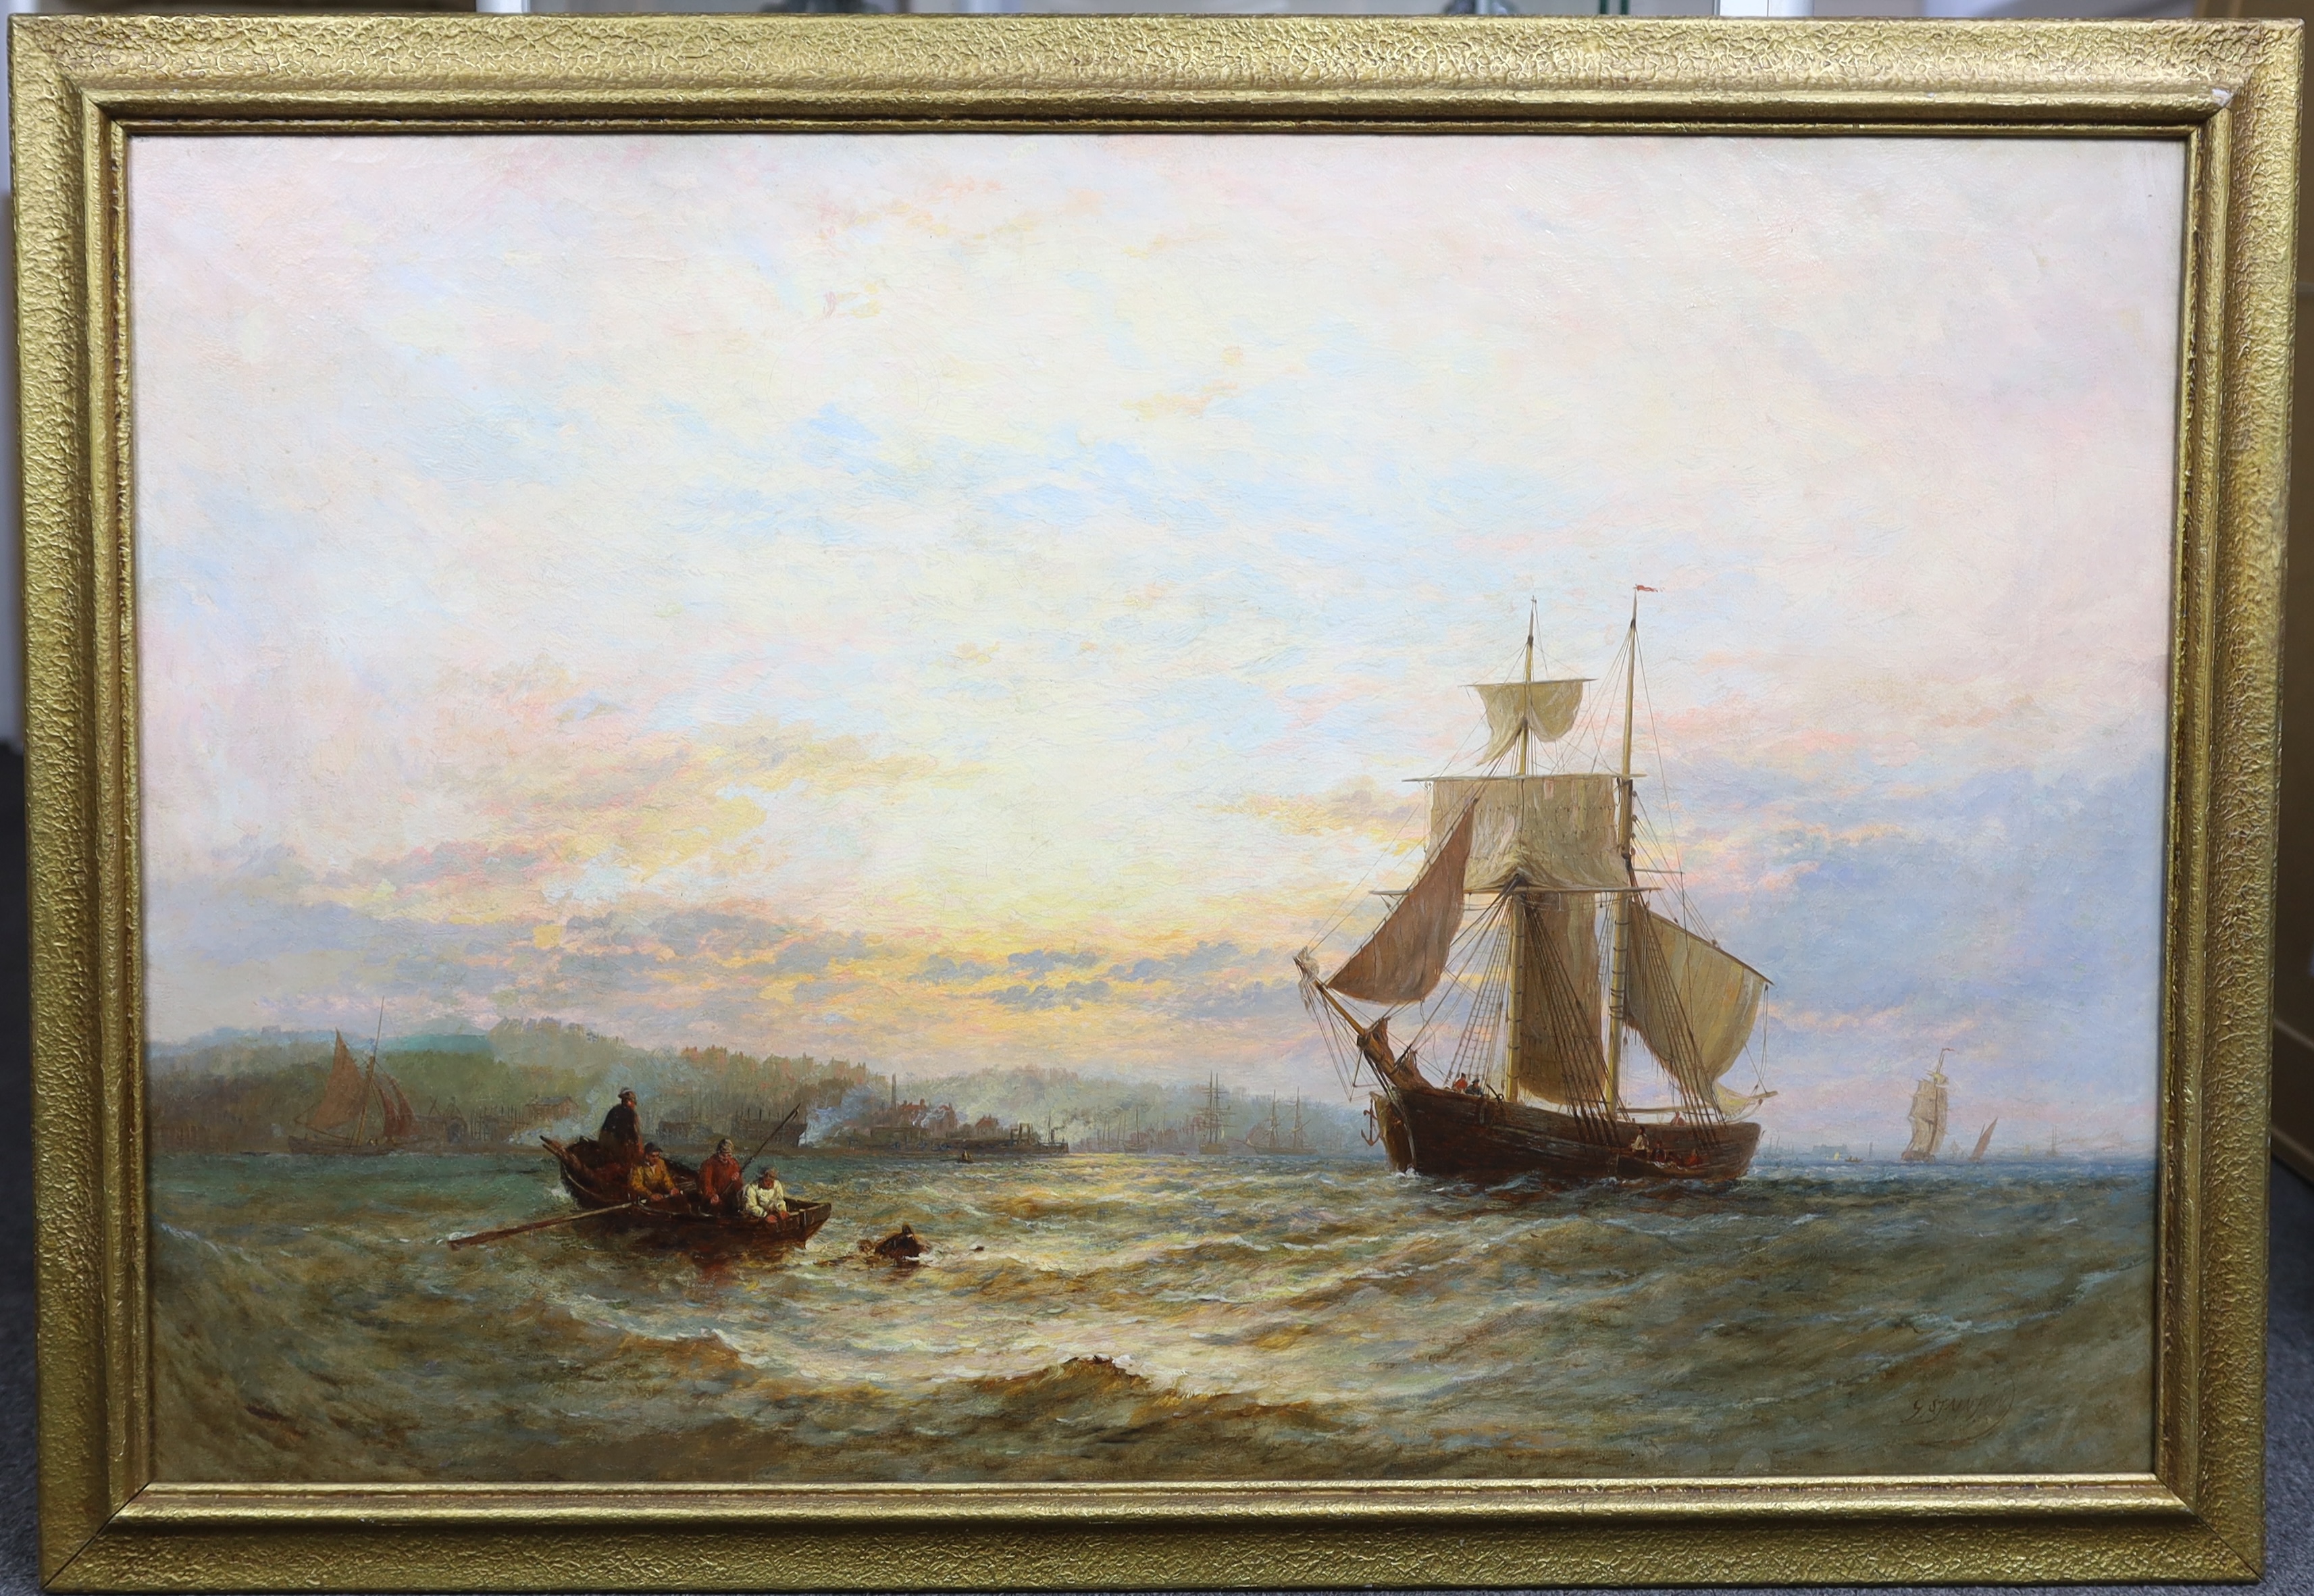 George Stainton (British, fl. 1860-1890), Shipping in a calm sea at dawn, oil on canvas, 60 x 90cm